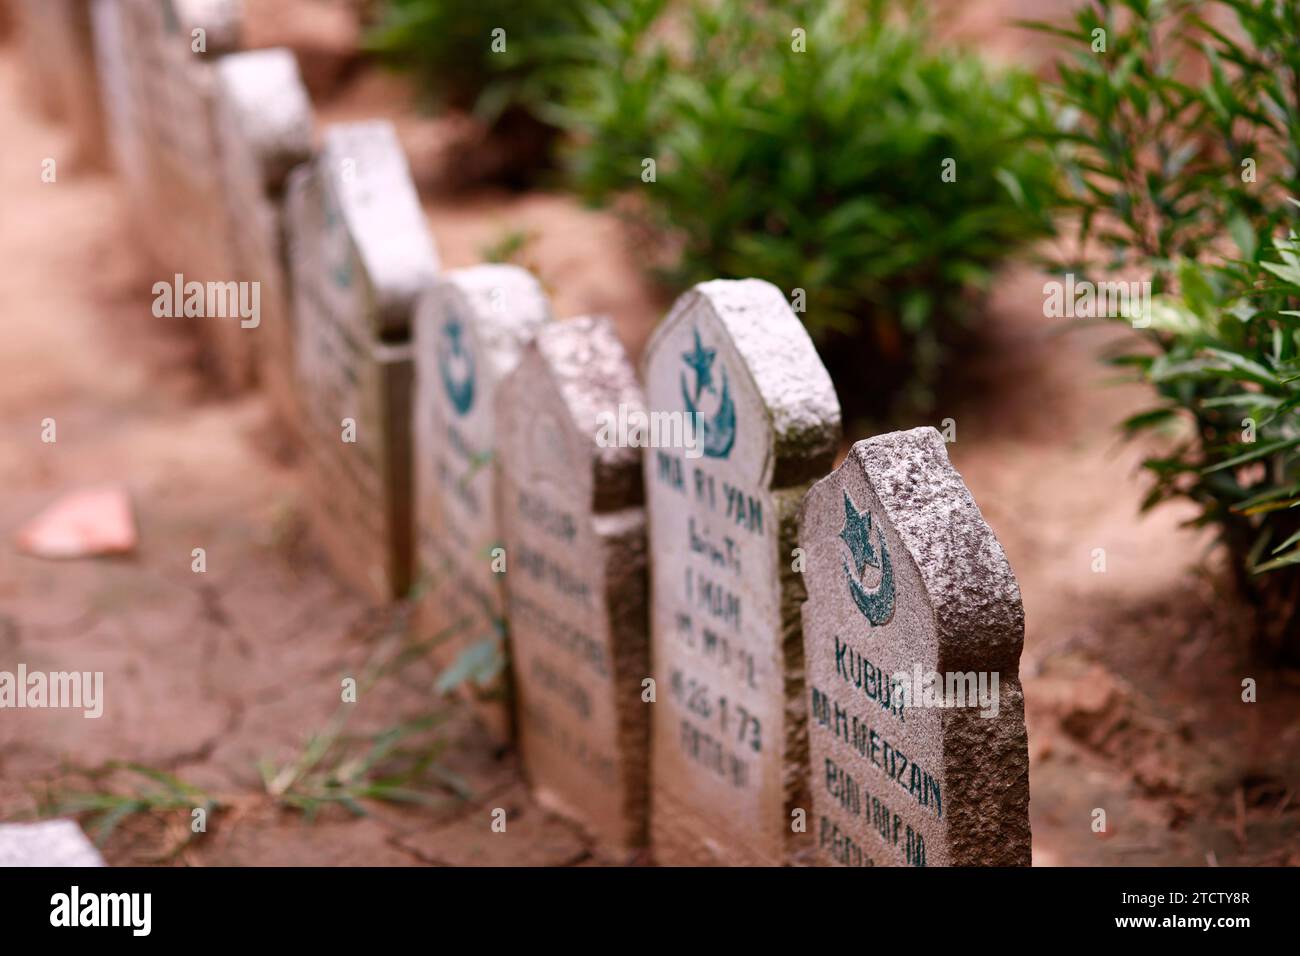 Mubarak mosque. Old cham muslim cemetery. Vietnam. Stock Photo